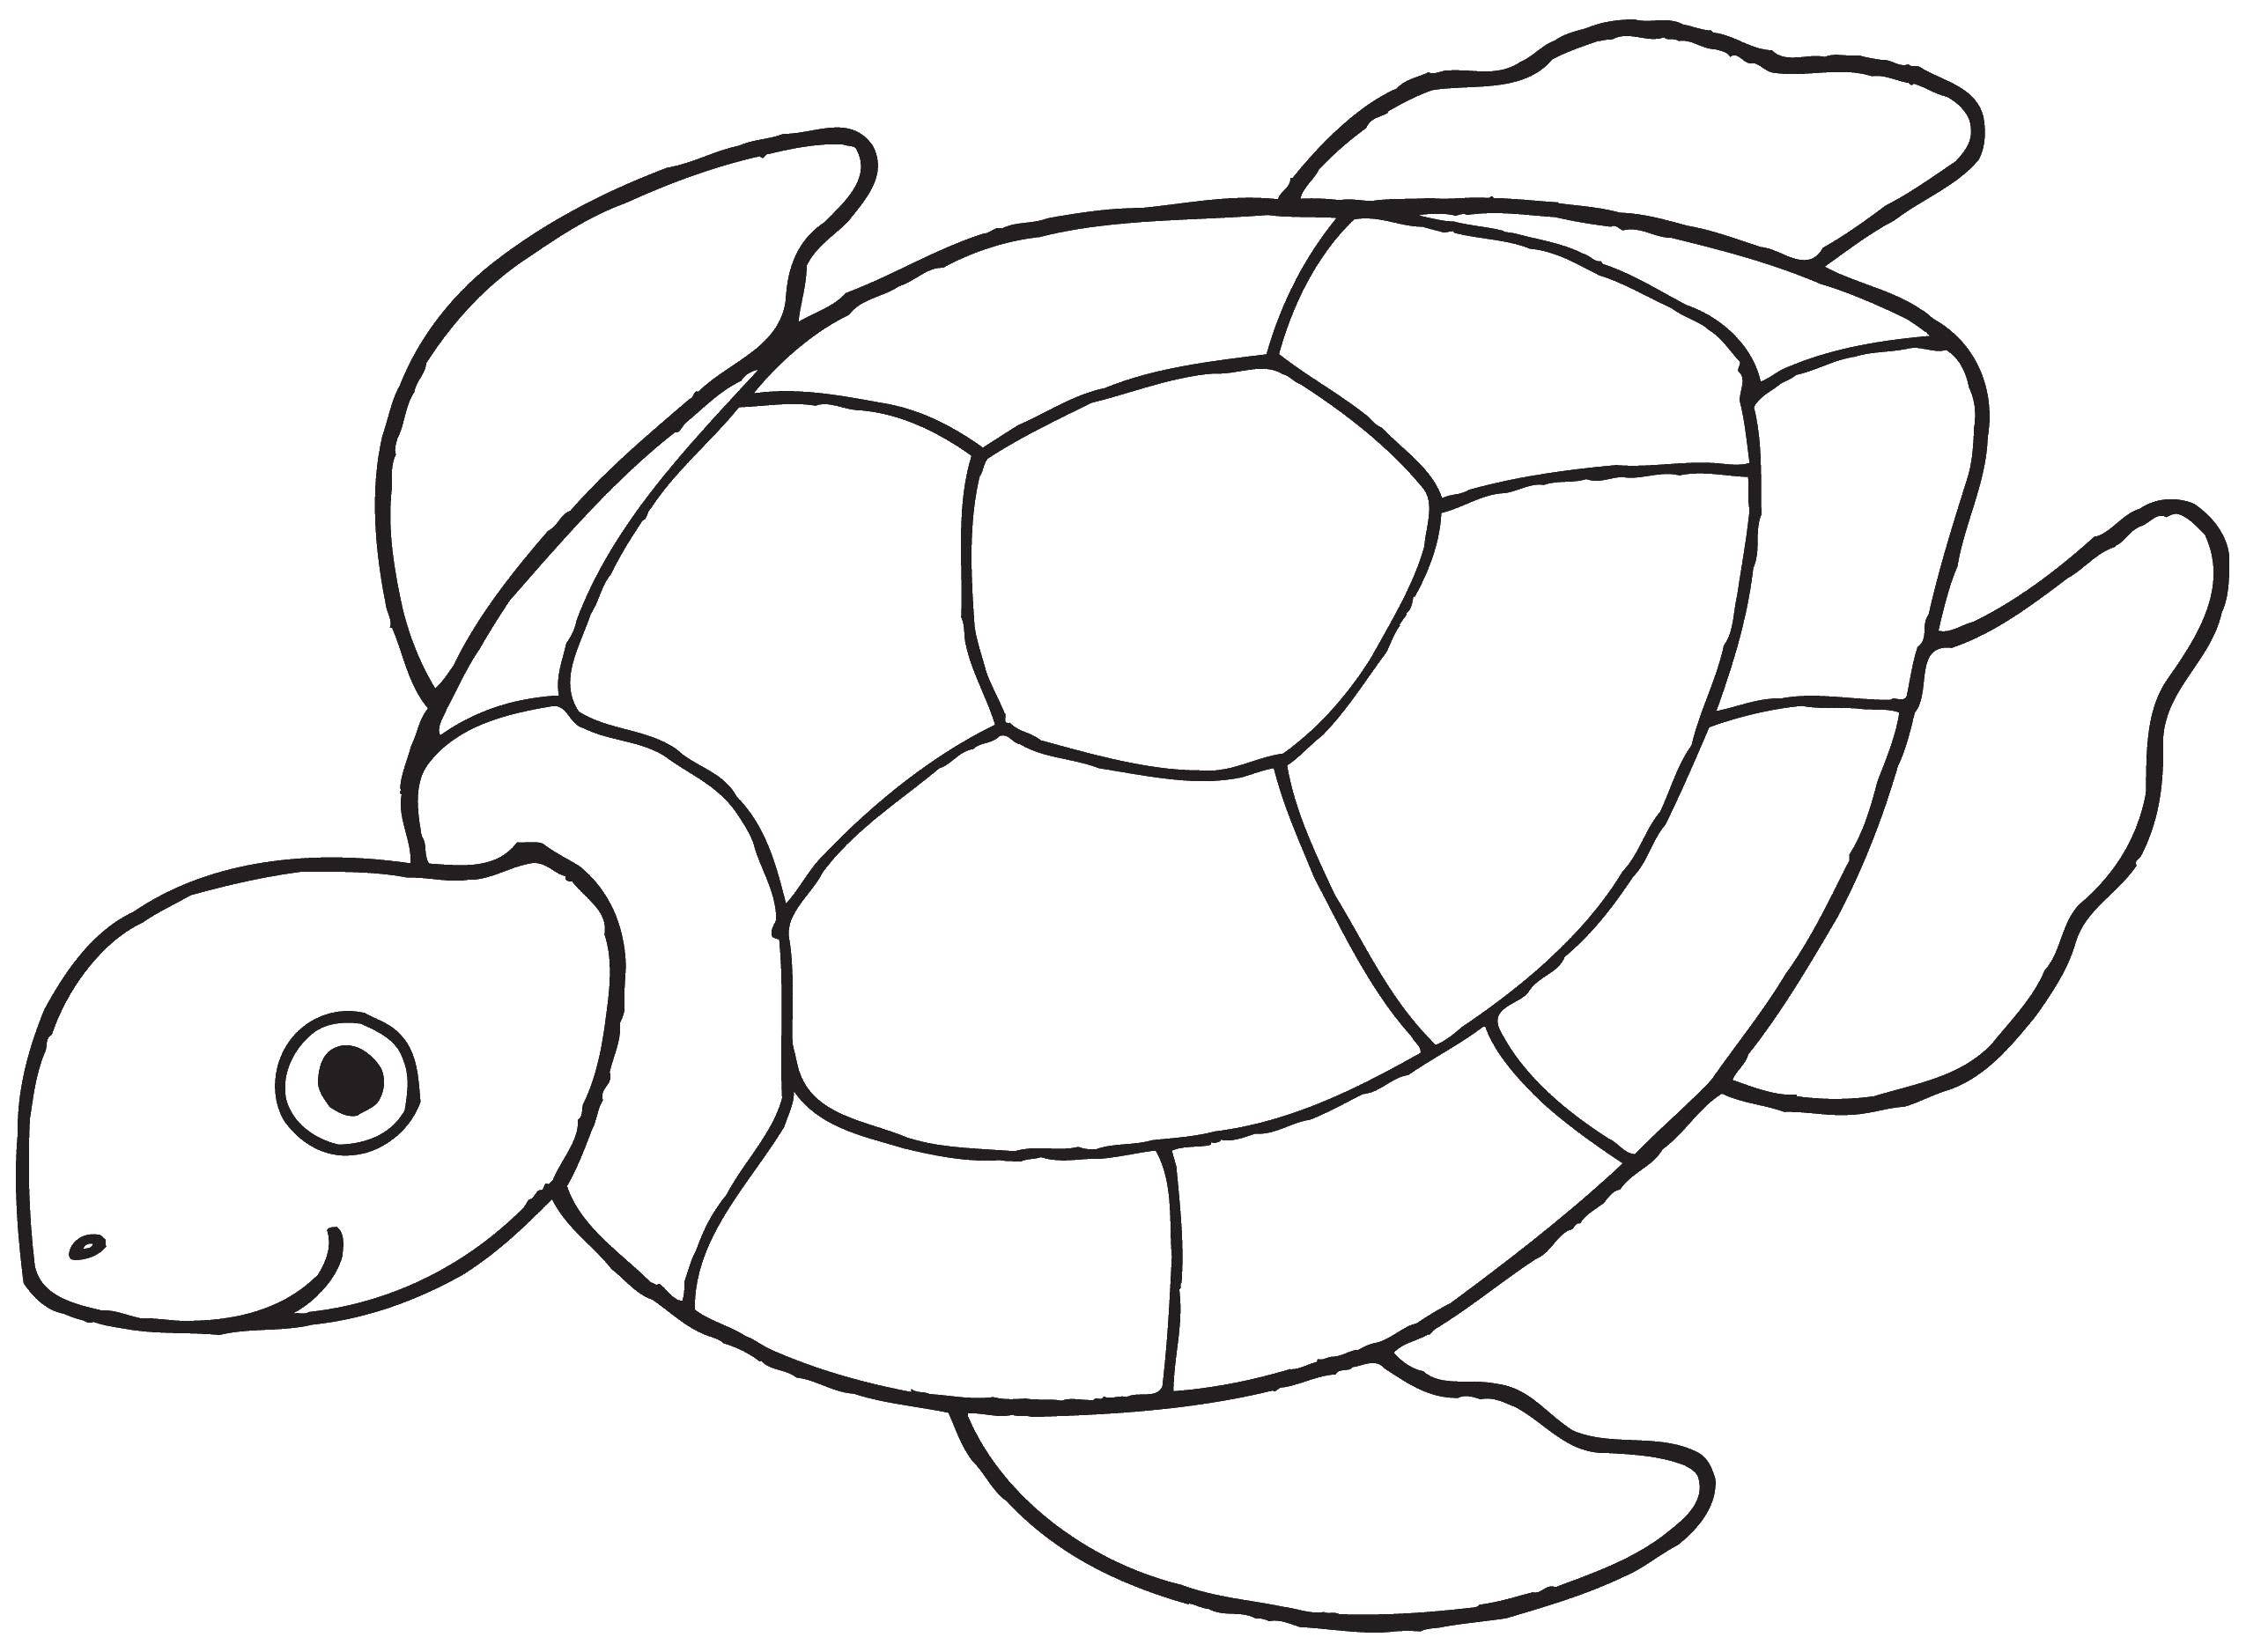 Coloring Floating turtle. Category marine. Tags:  animals, turtles, sea turtles.